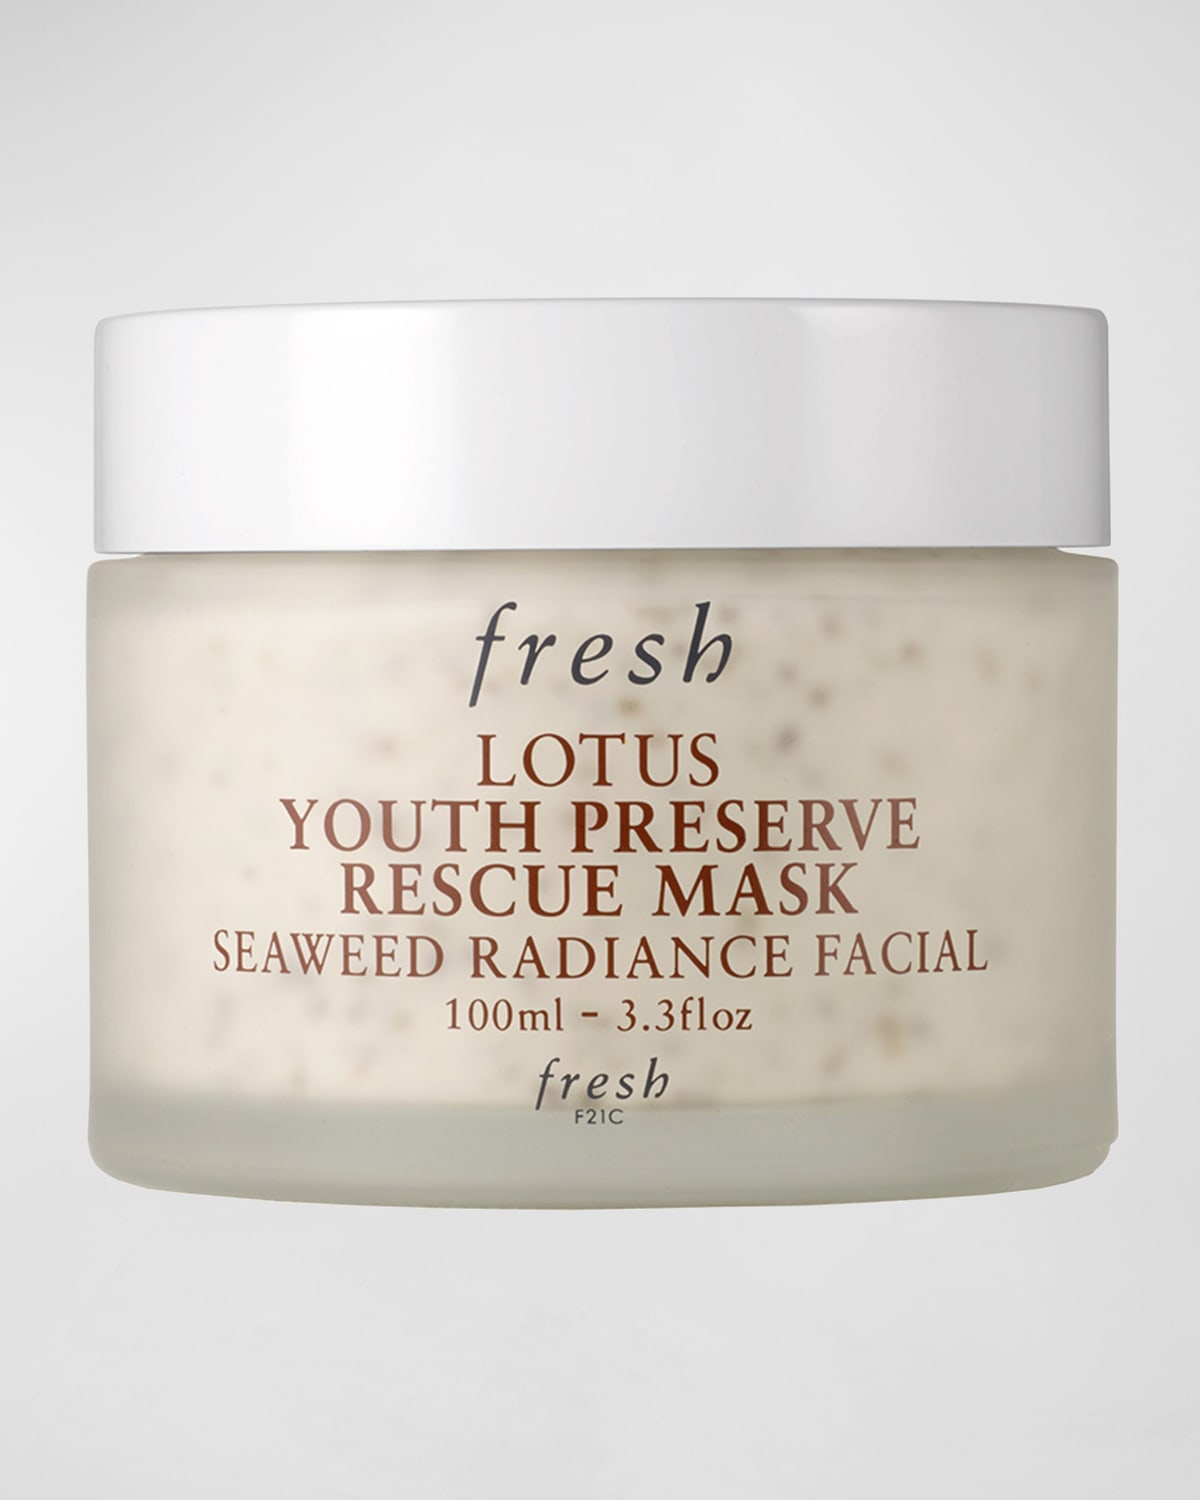 Lotus Youth Preserve Rescue Mask, 3.3 oz.